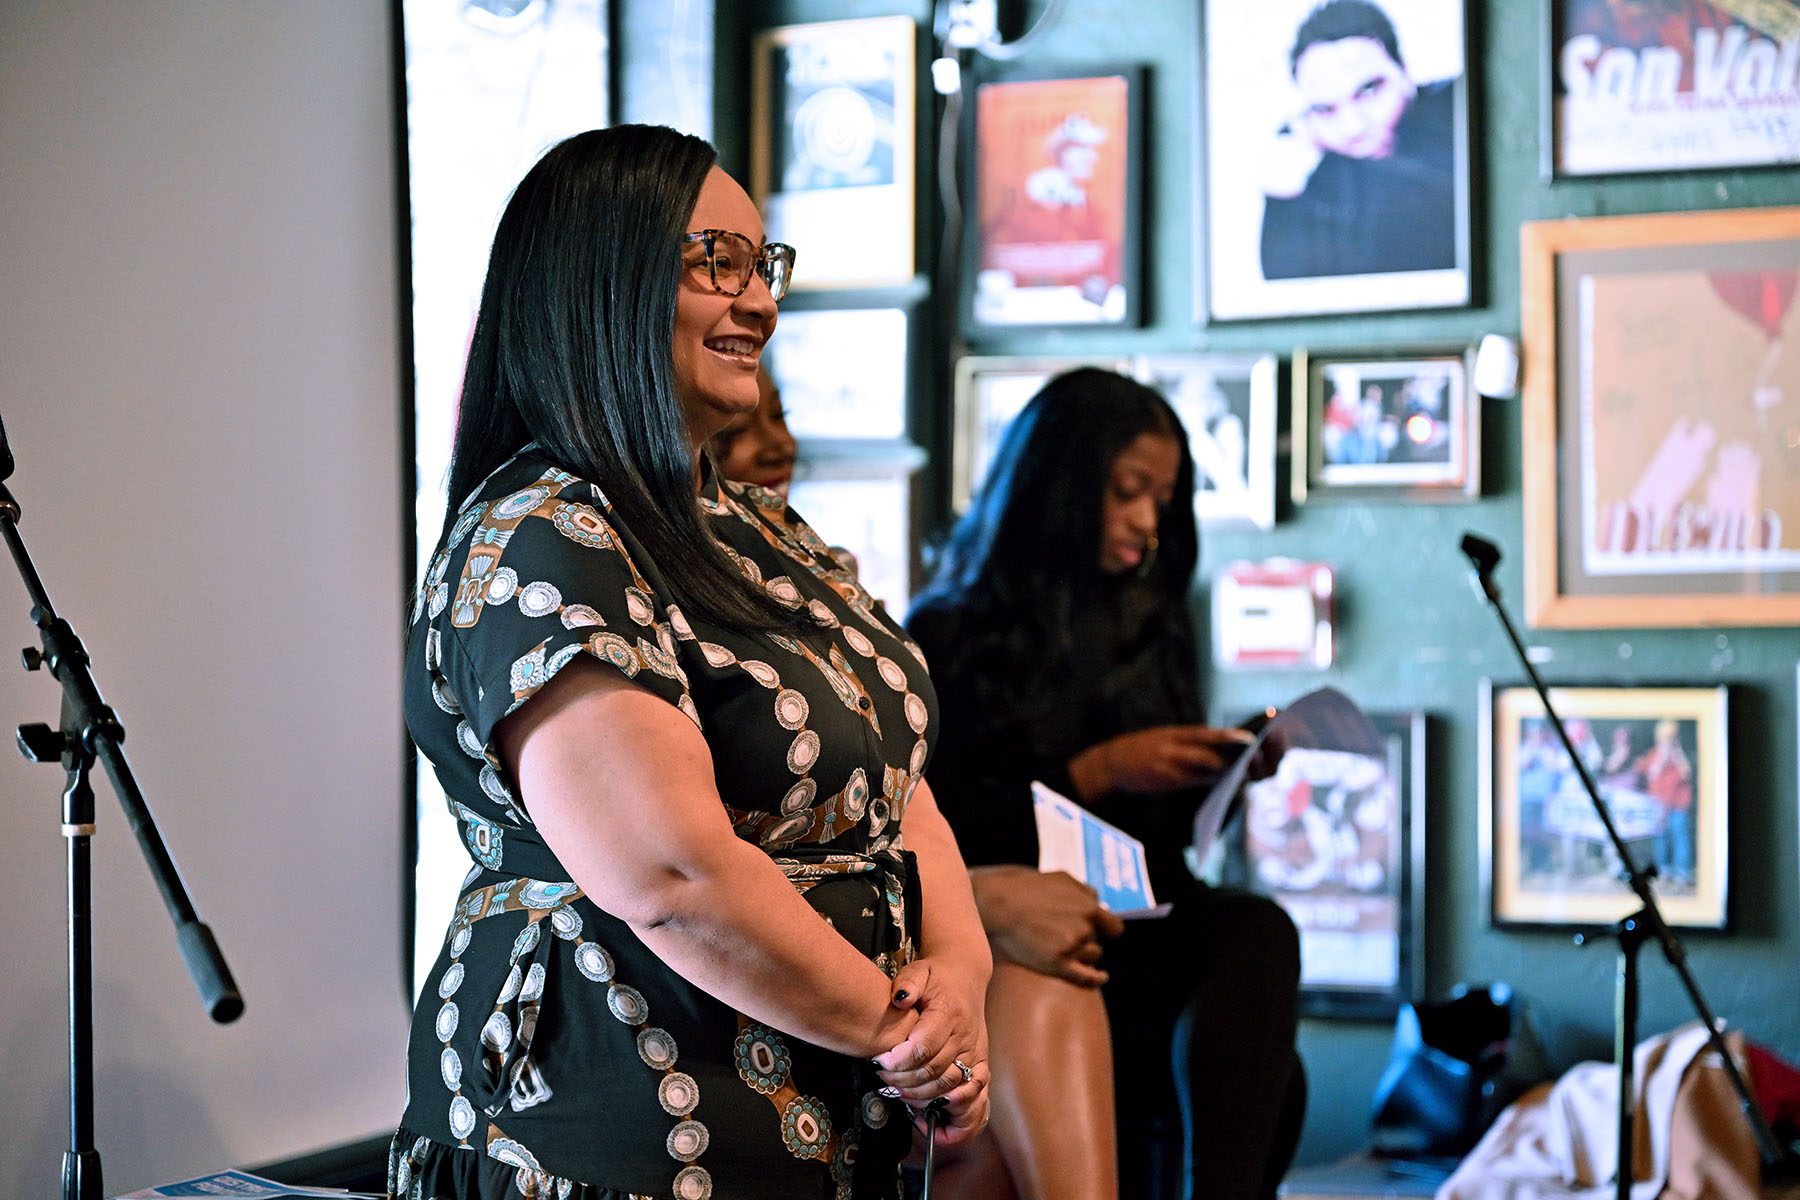 Nikema Williams speaks at an Atlanta event held at a music venue.